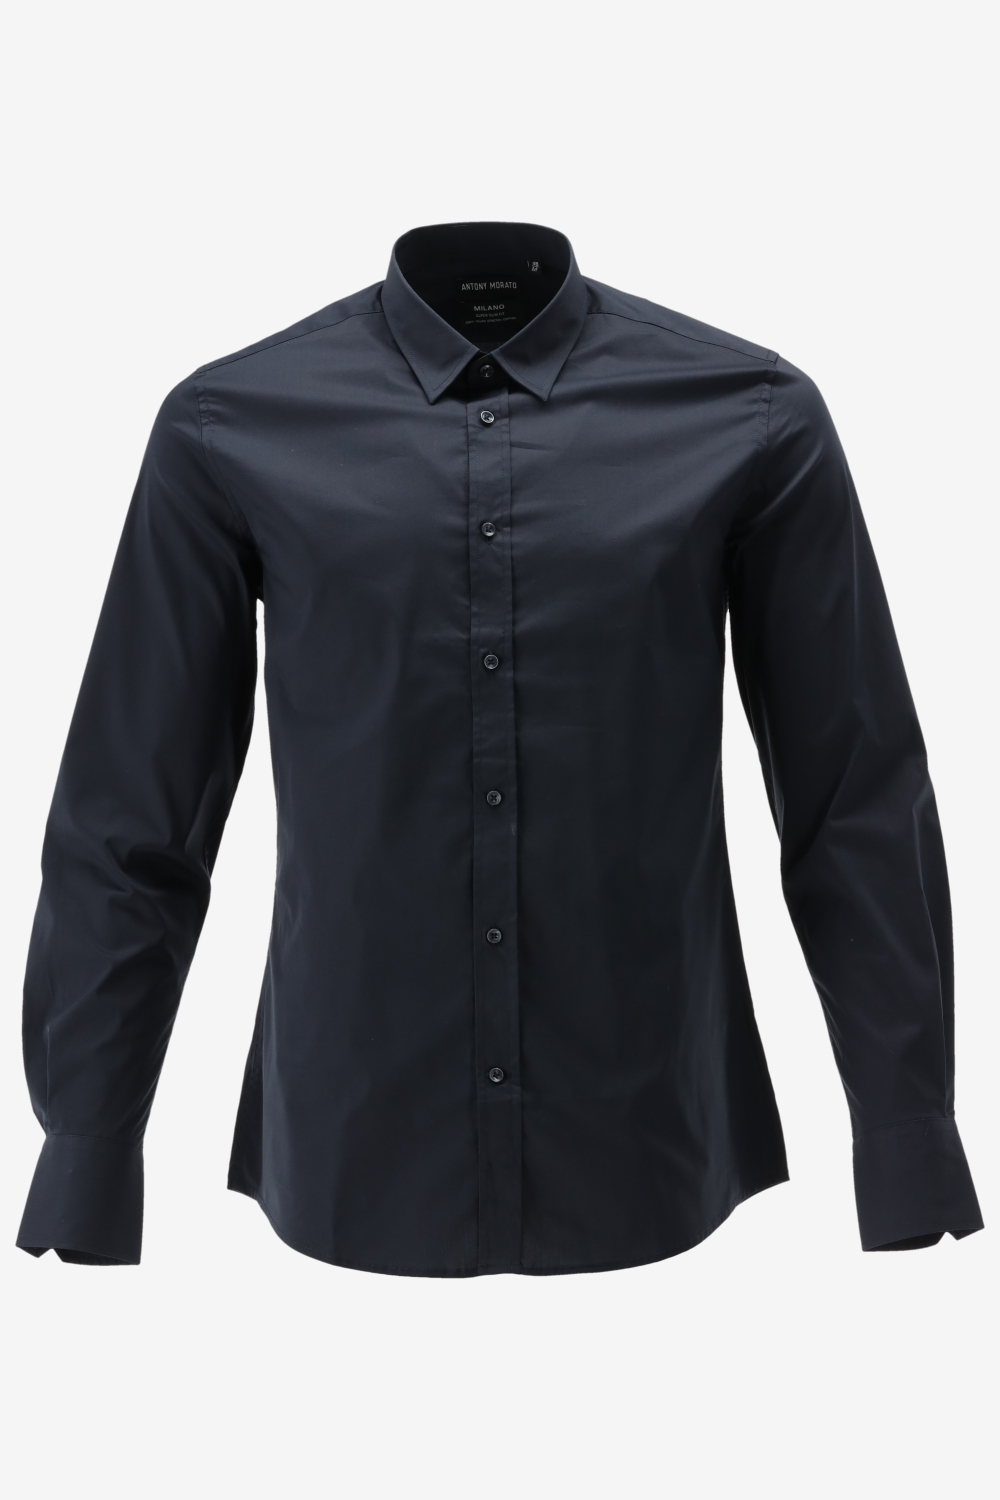 Antony Morato Overhemd Shirt Milano Mmsl00694 Fa450010 7073 Blue Ink Mannen Maat - 54